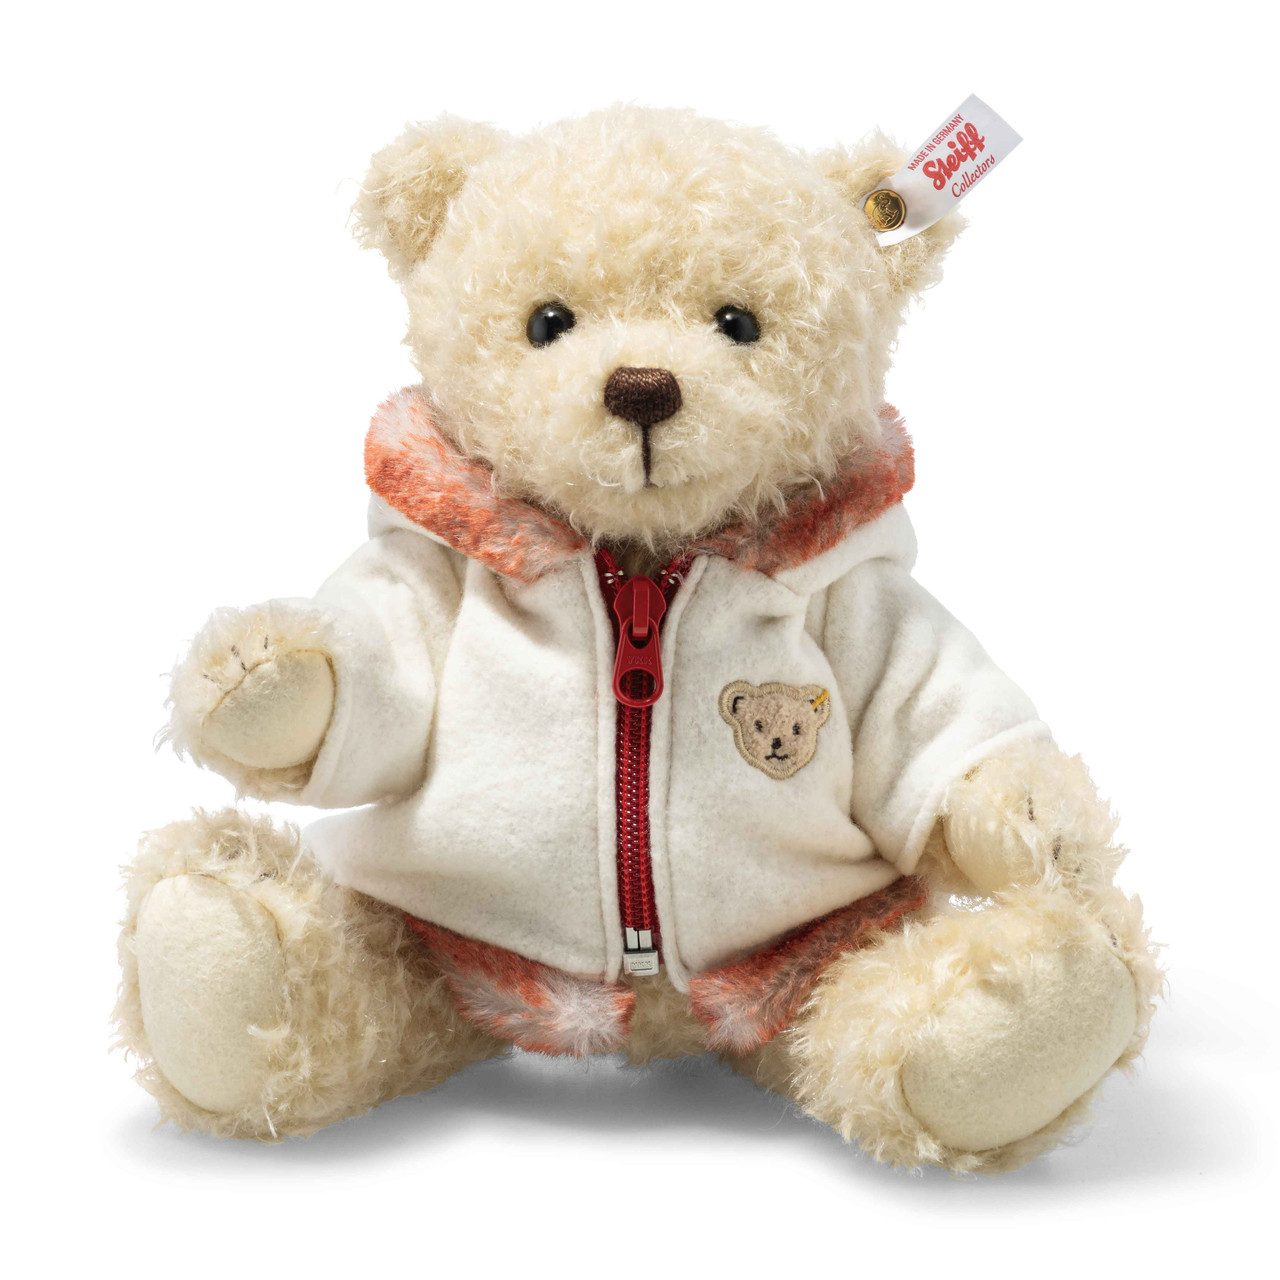 Mila Teddy Bear with Winter Jacket - Steiff 2022 Winter Limited Edition